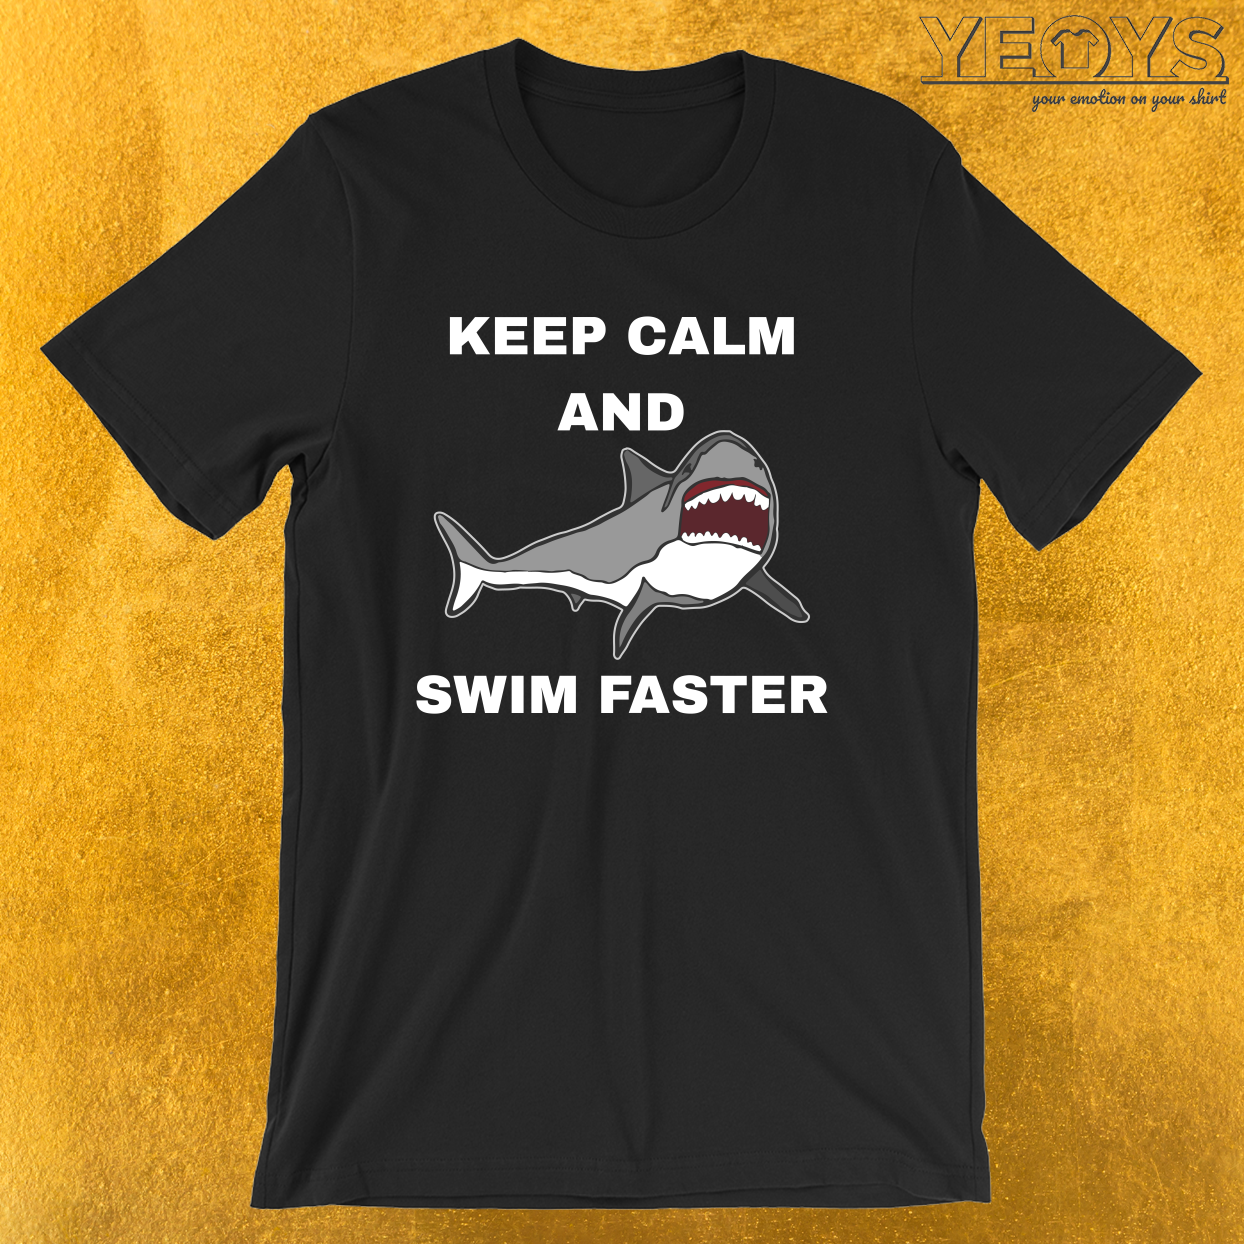 Keep Calm And Swim Faster – Funny Shark Tee